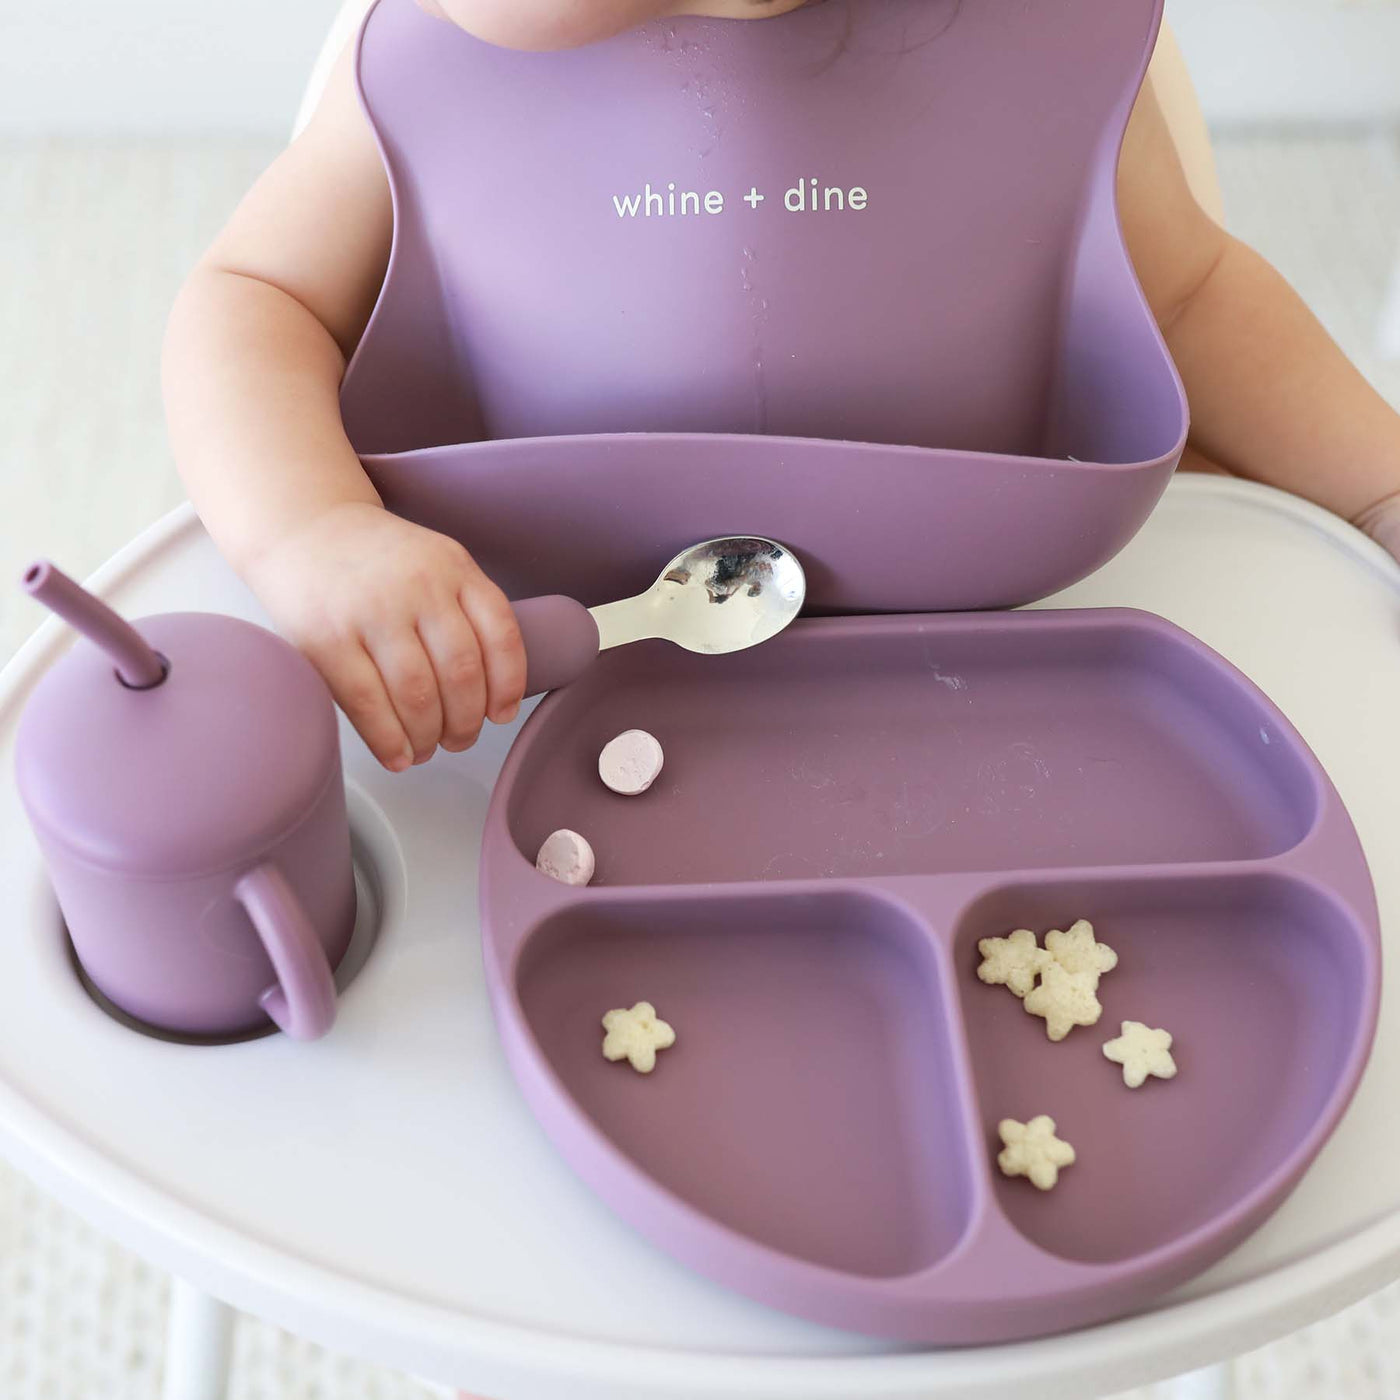 purple silicone baby bib whine + dine 